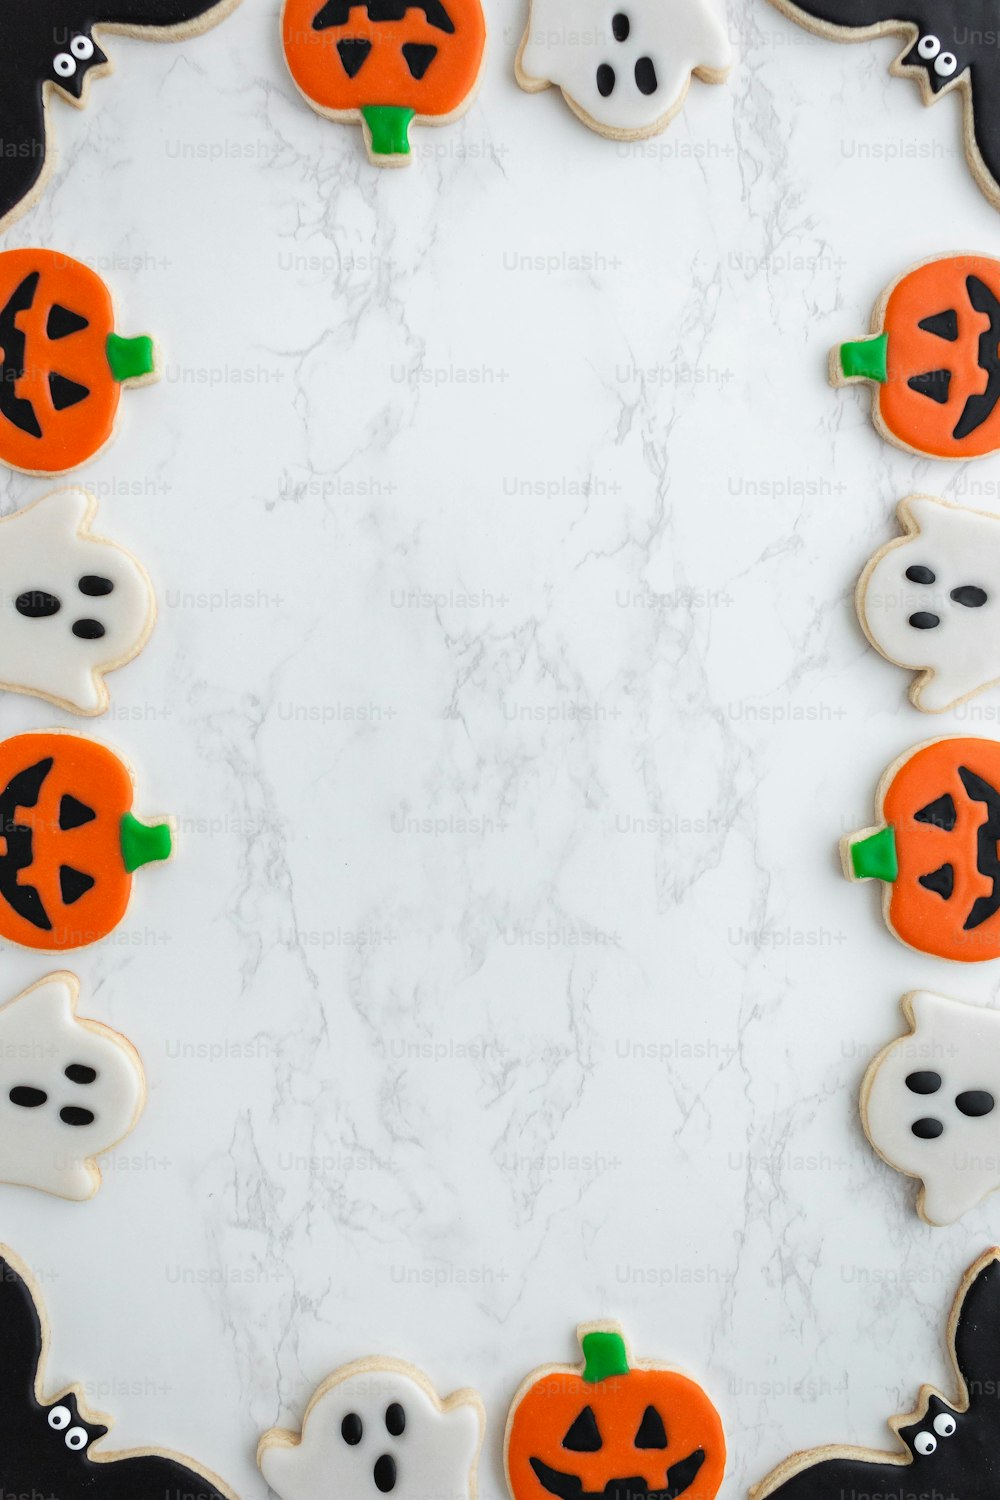 biscotti decorati disposti a forma di fantasma e zucche